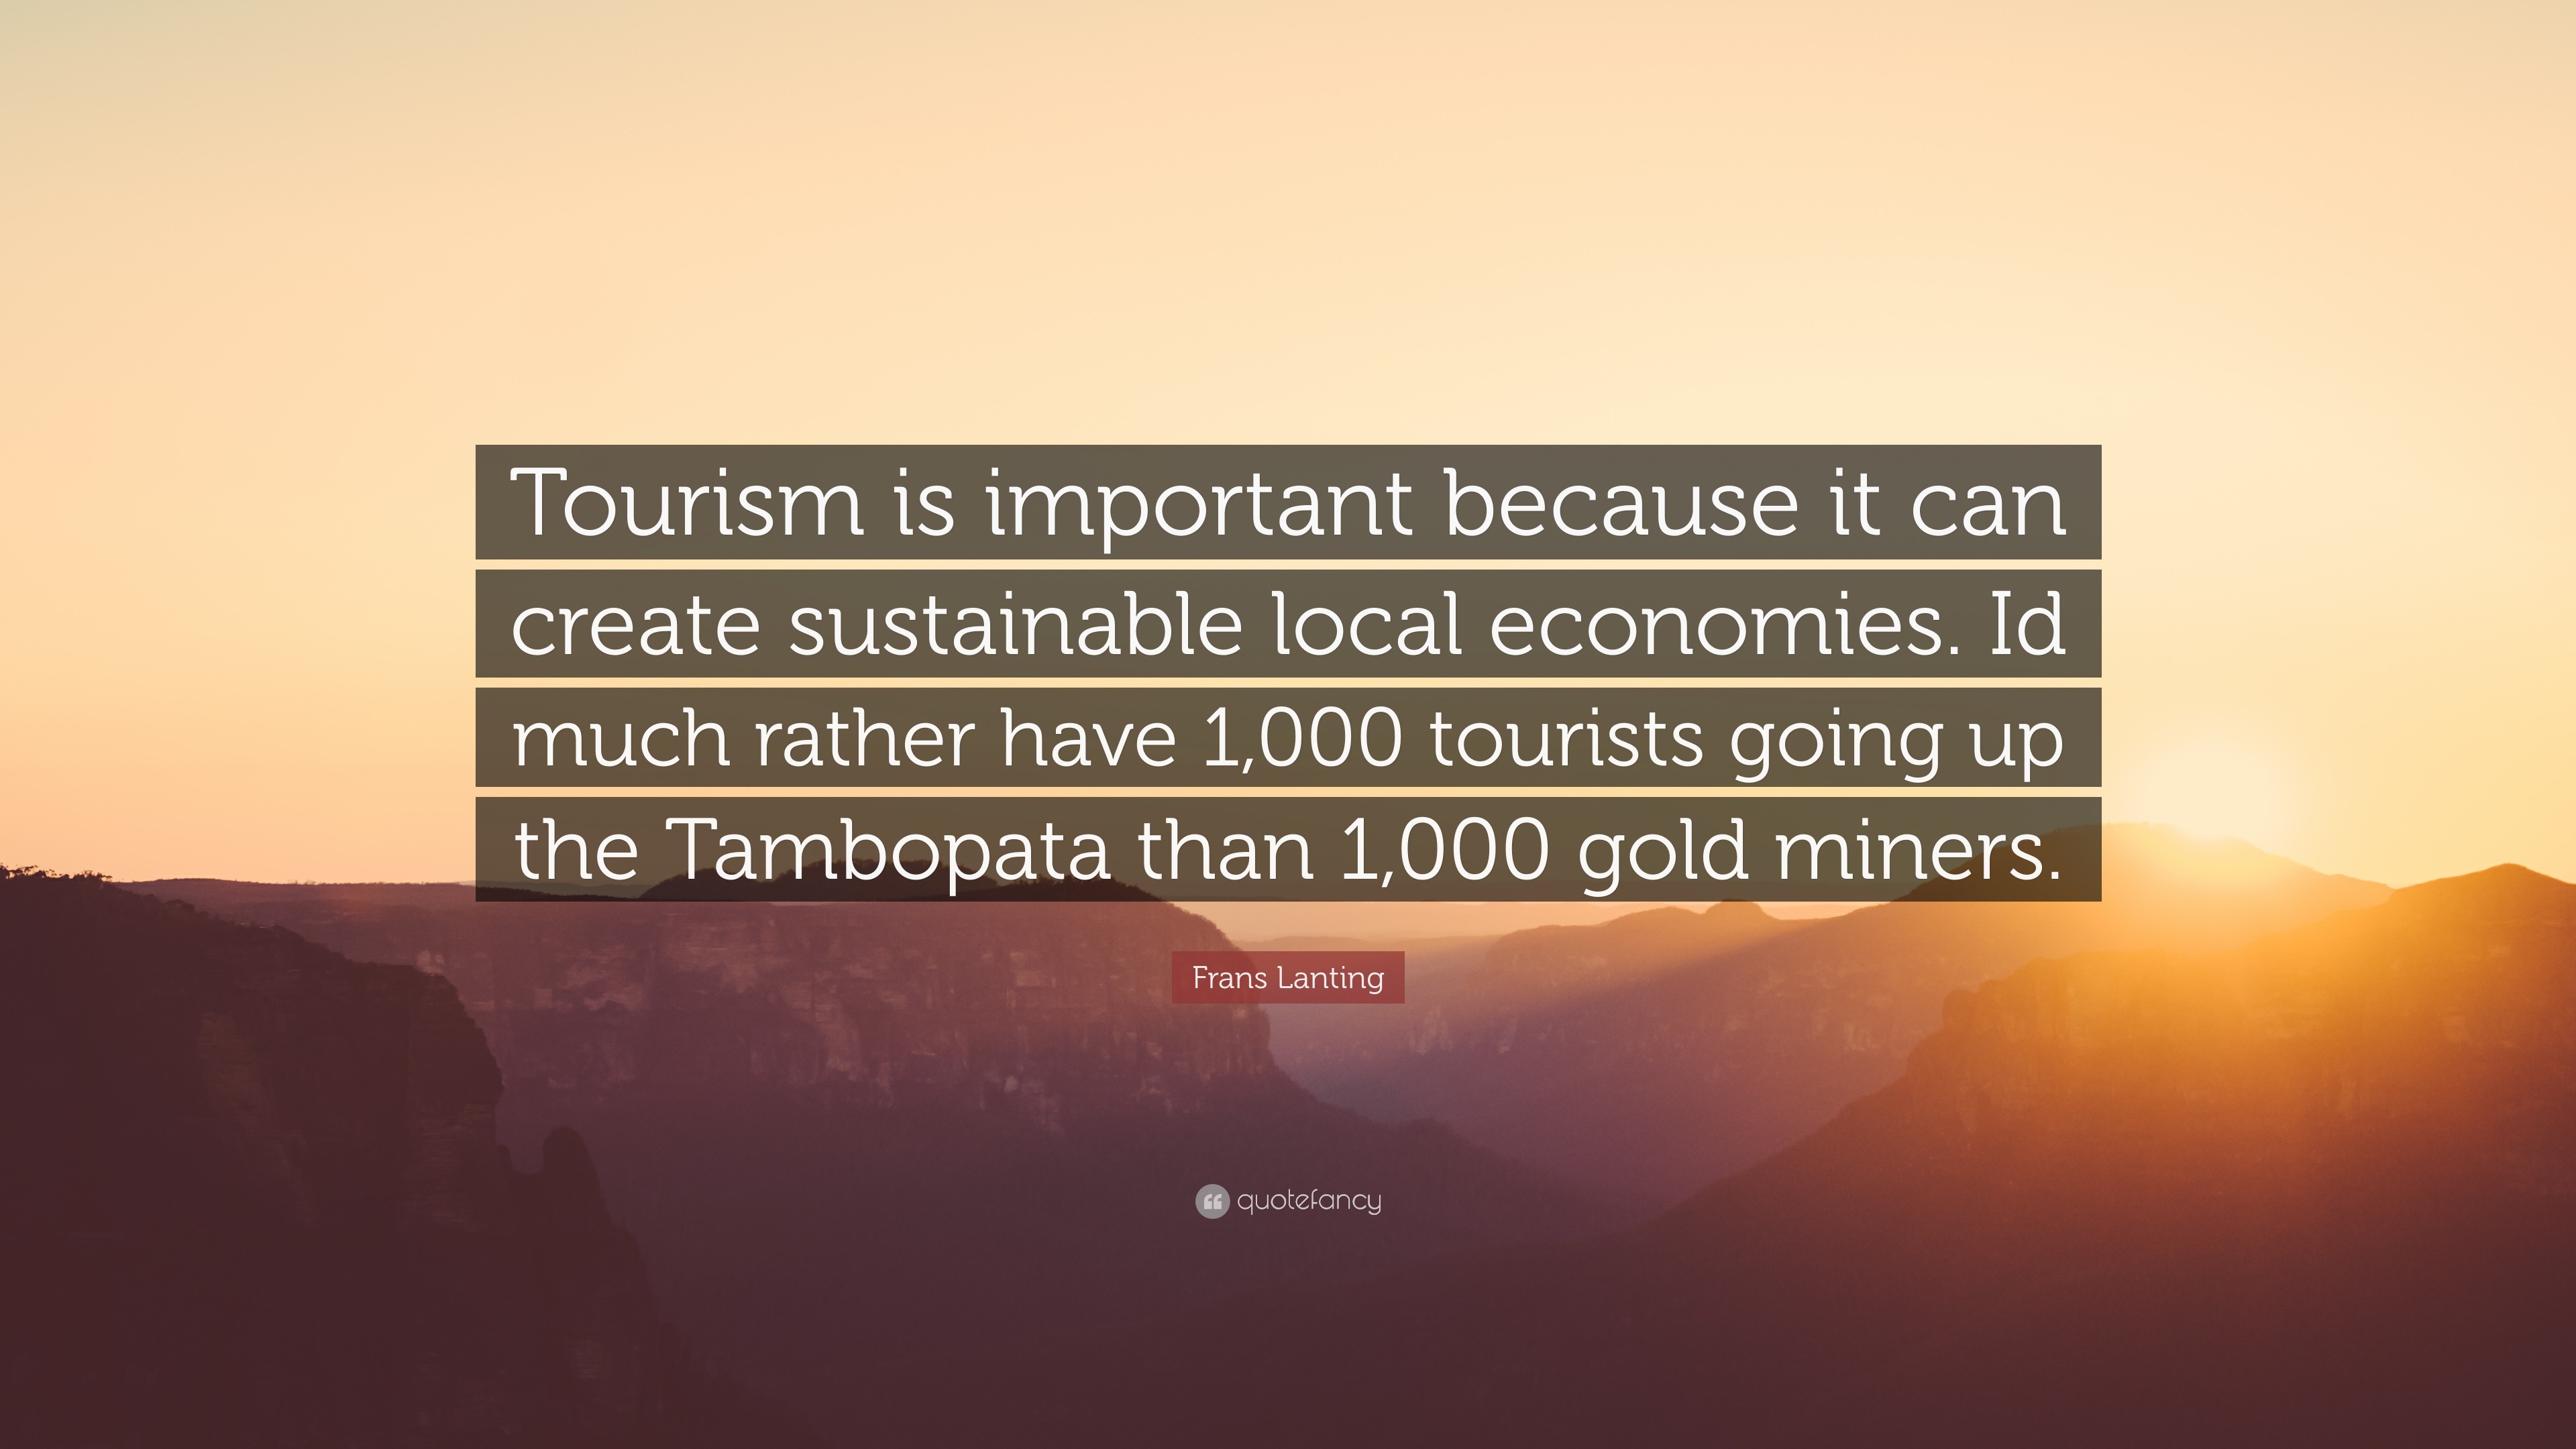 famous quotes about tourism